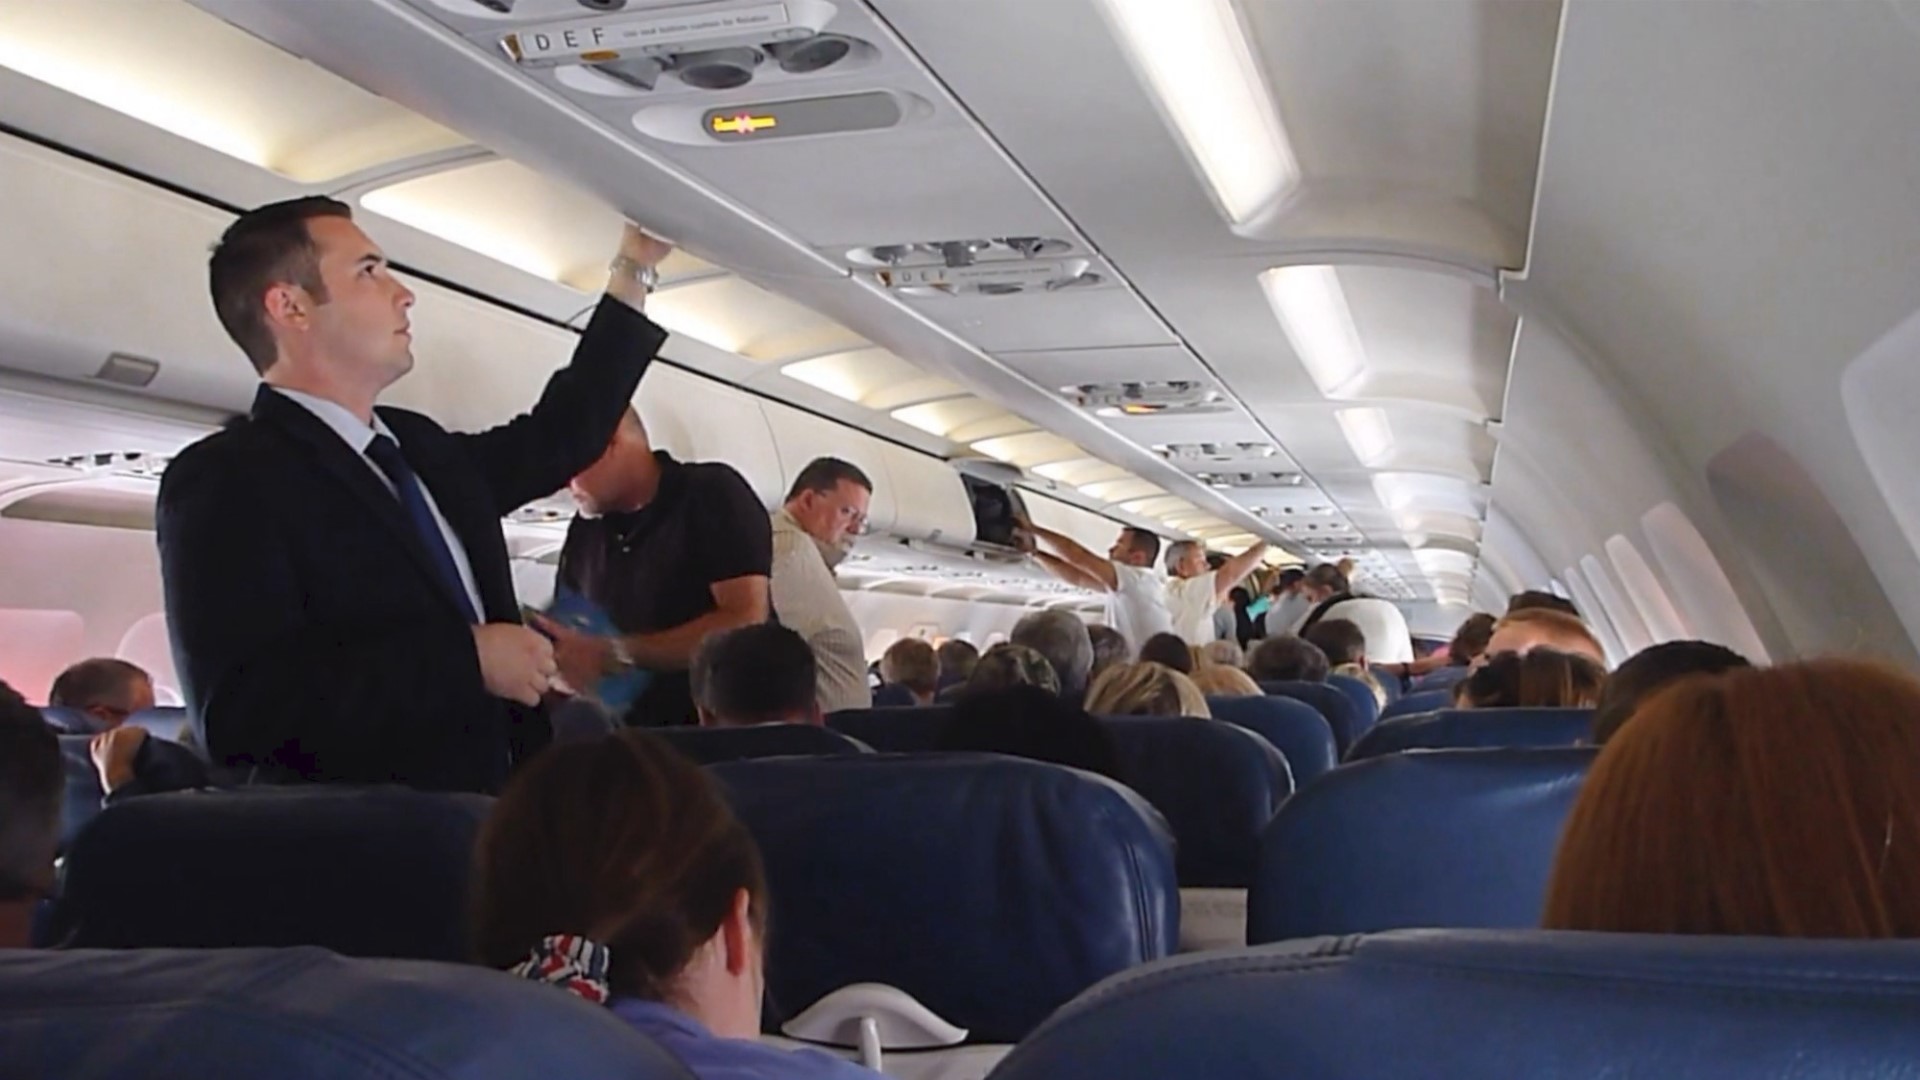 unruly plane passengers